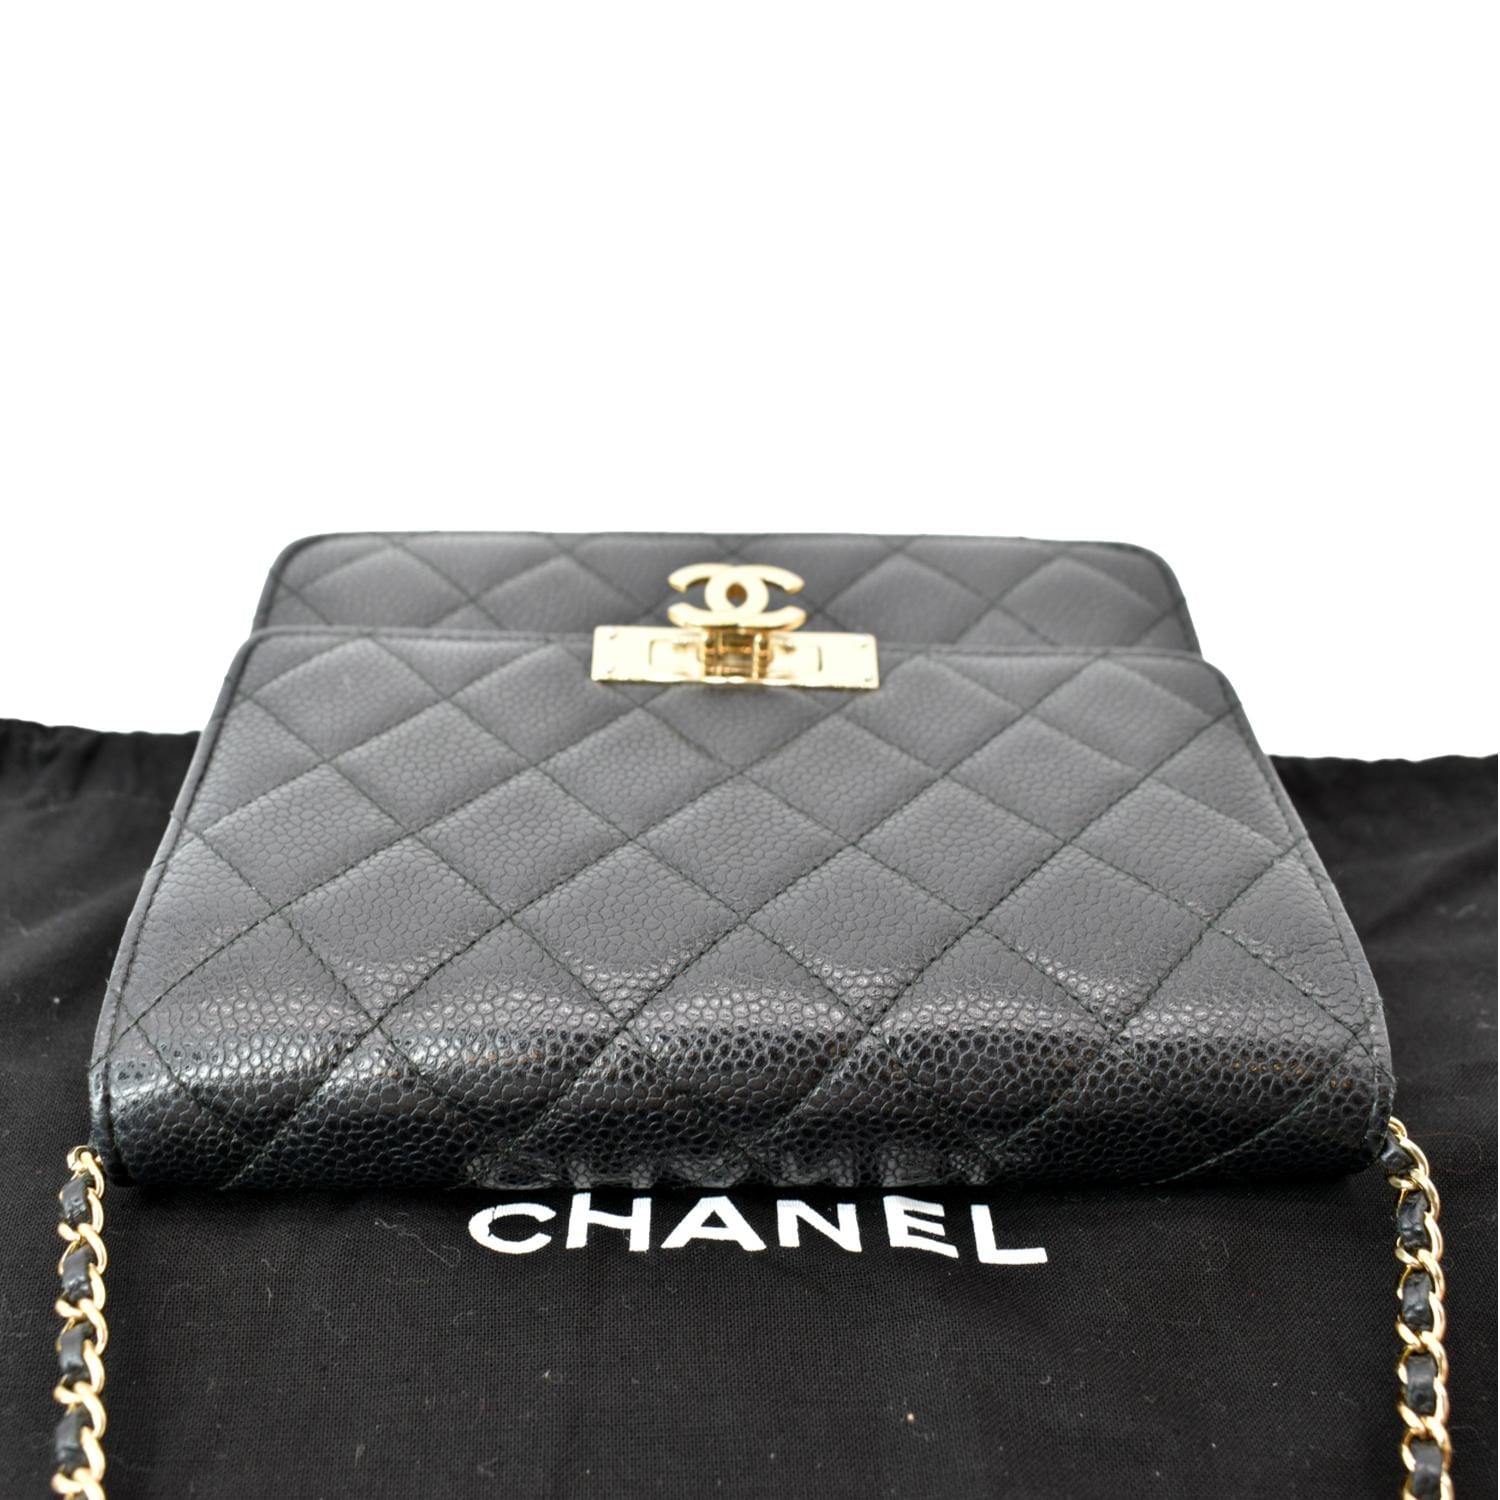 Chanel Chanel Black Caviar Leather CC Logo Wallet On Chain WOC